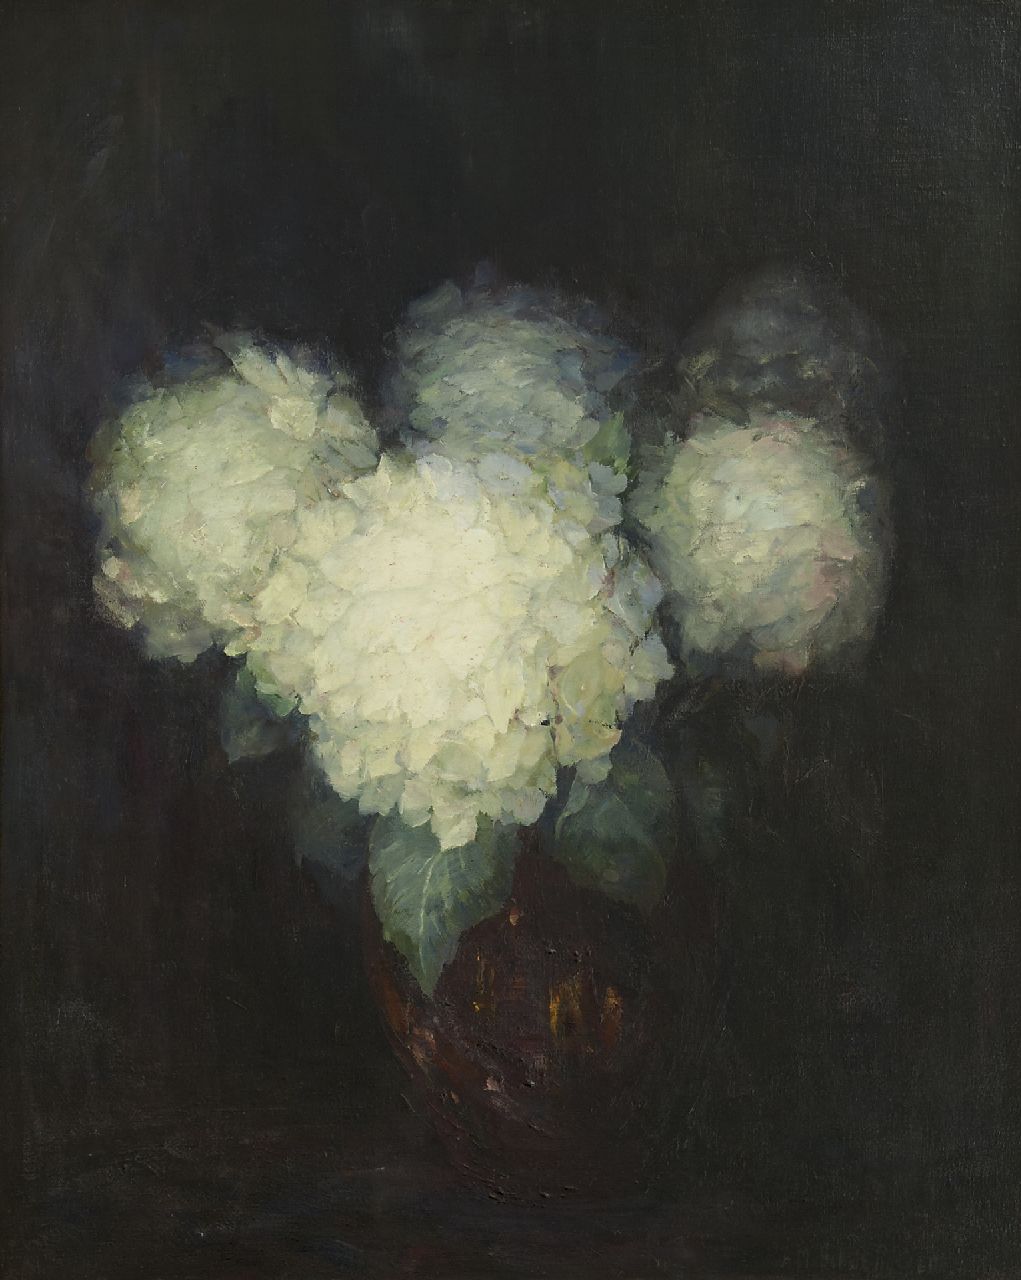 Russell van Schaik A.M.  | Adeline Maud Russell van Schaik, Hydrangeas in a vase, oil on canvas 99.6 x 80.2 cm, signed l.r.